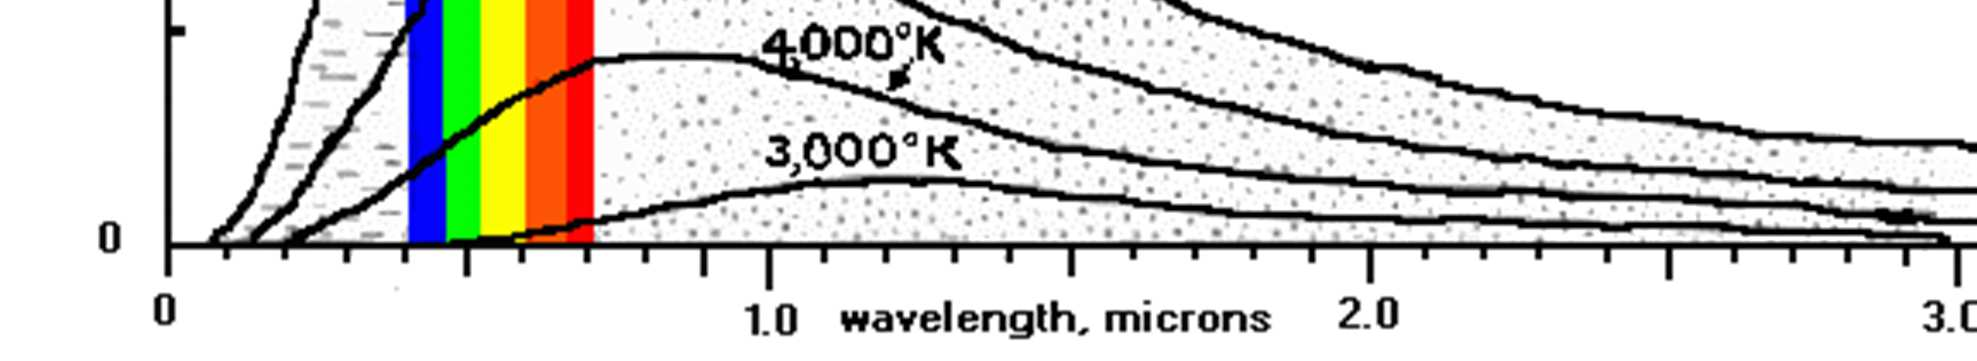 spektrálisan: A fény tulajdonságai monokromatikus vonalas atomi (molekuláris) gázok emissziója (sávos